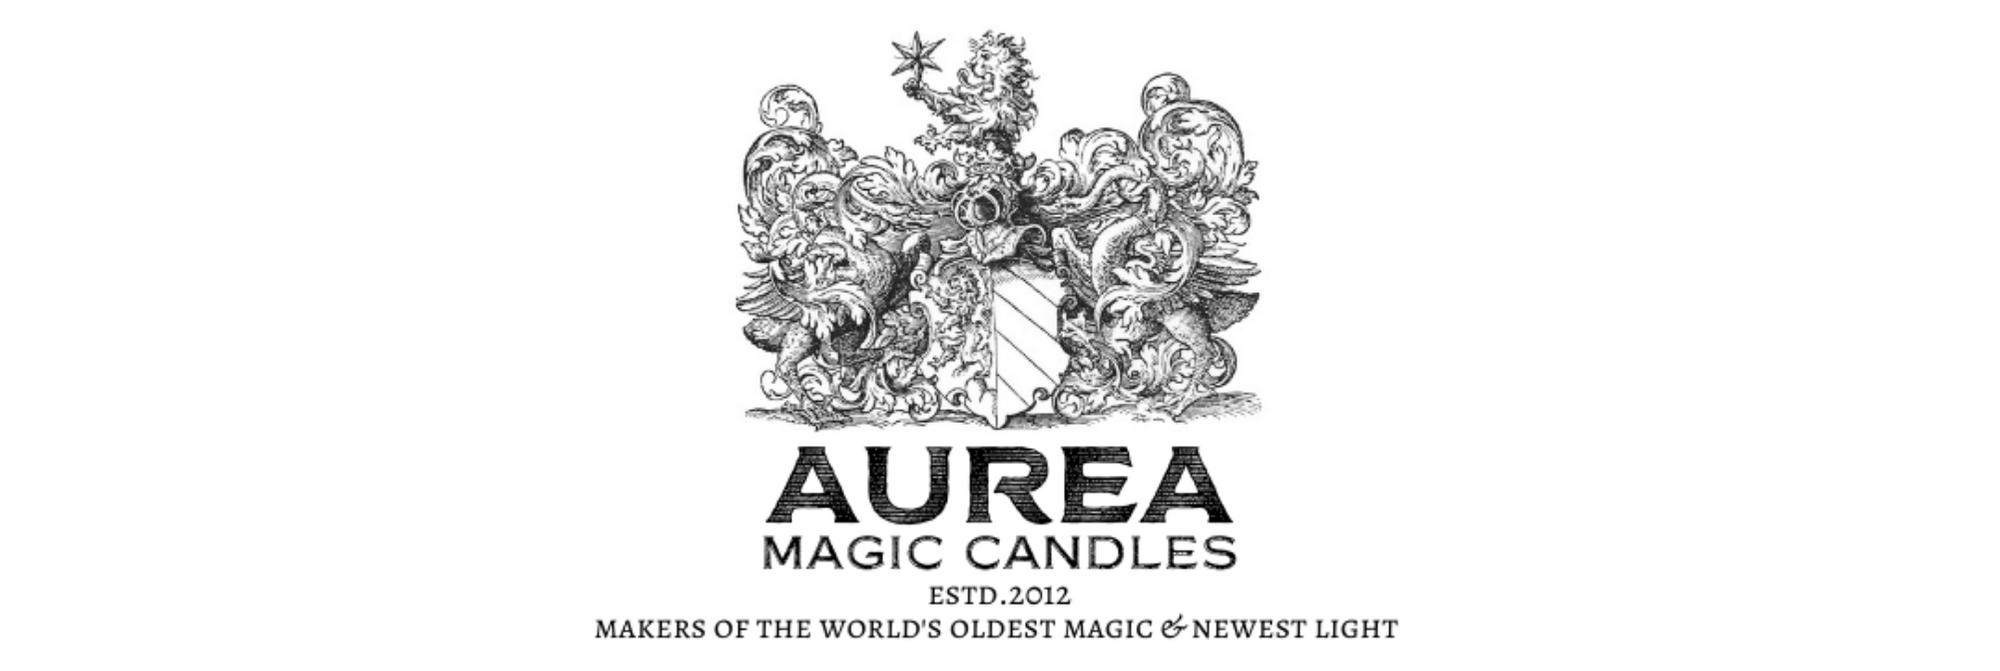 The Golden Torch by Aurea magic candles